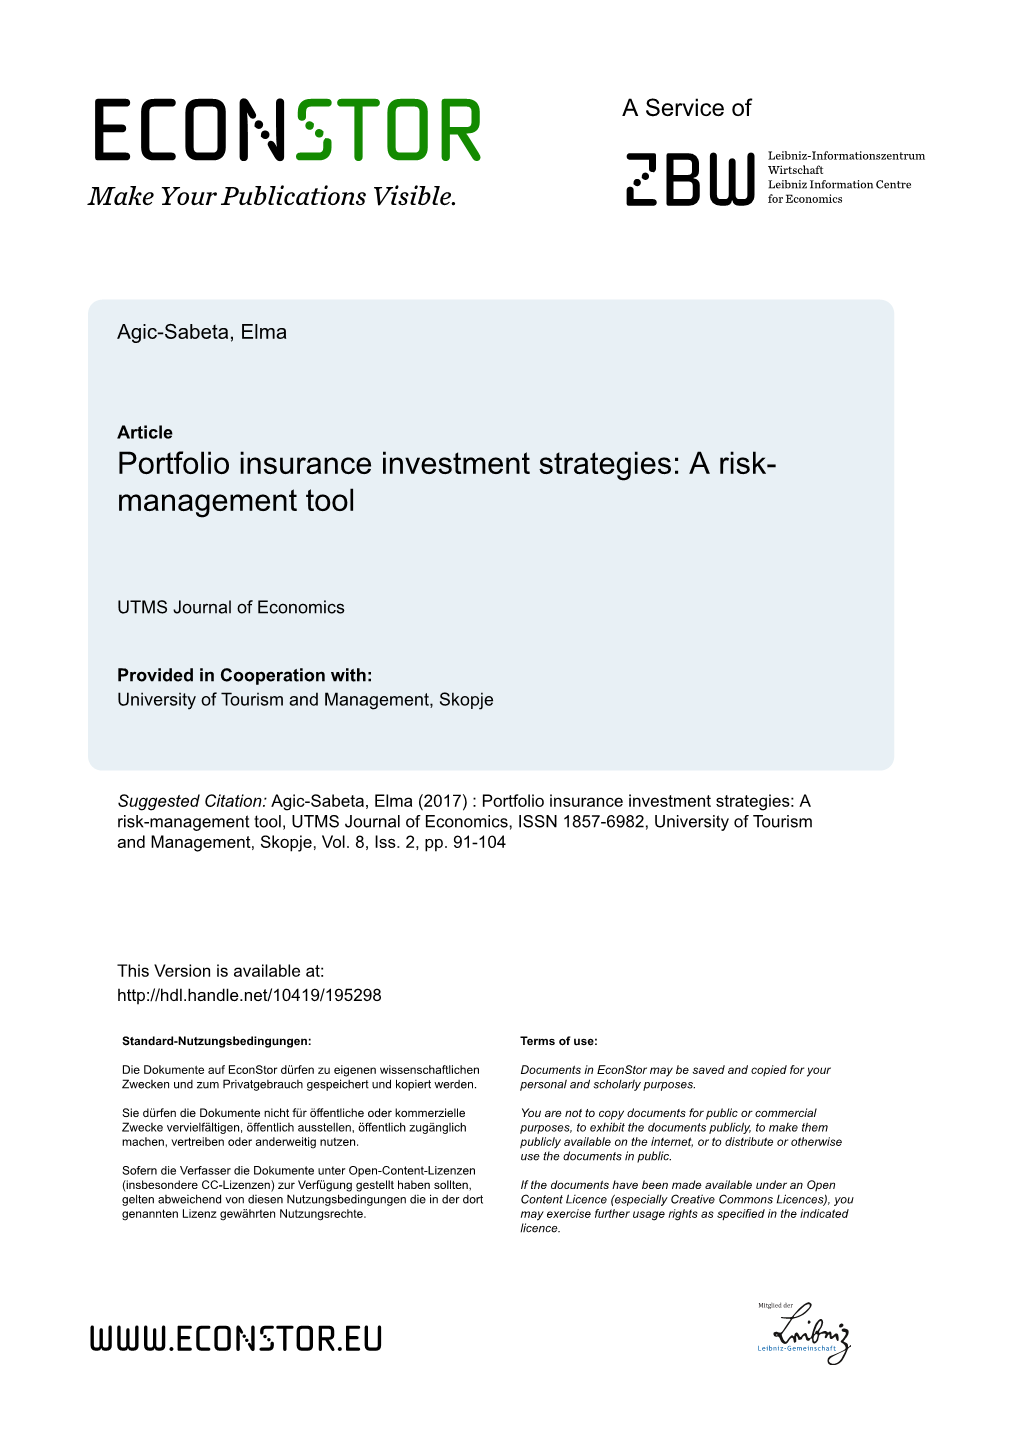 Portfolio Insurance Investment Strategies: a Risk-Management Tool, UTMS Journal of Economics, ISSN 1857-6982, University of Tourism and Management, Skopje, Vol